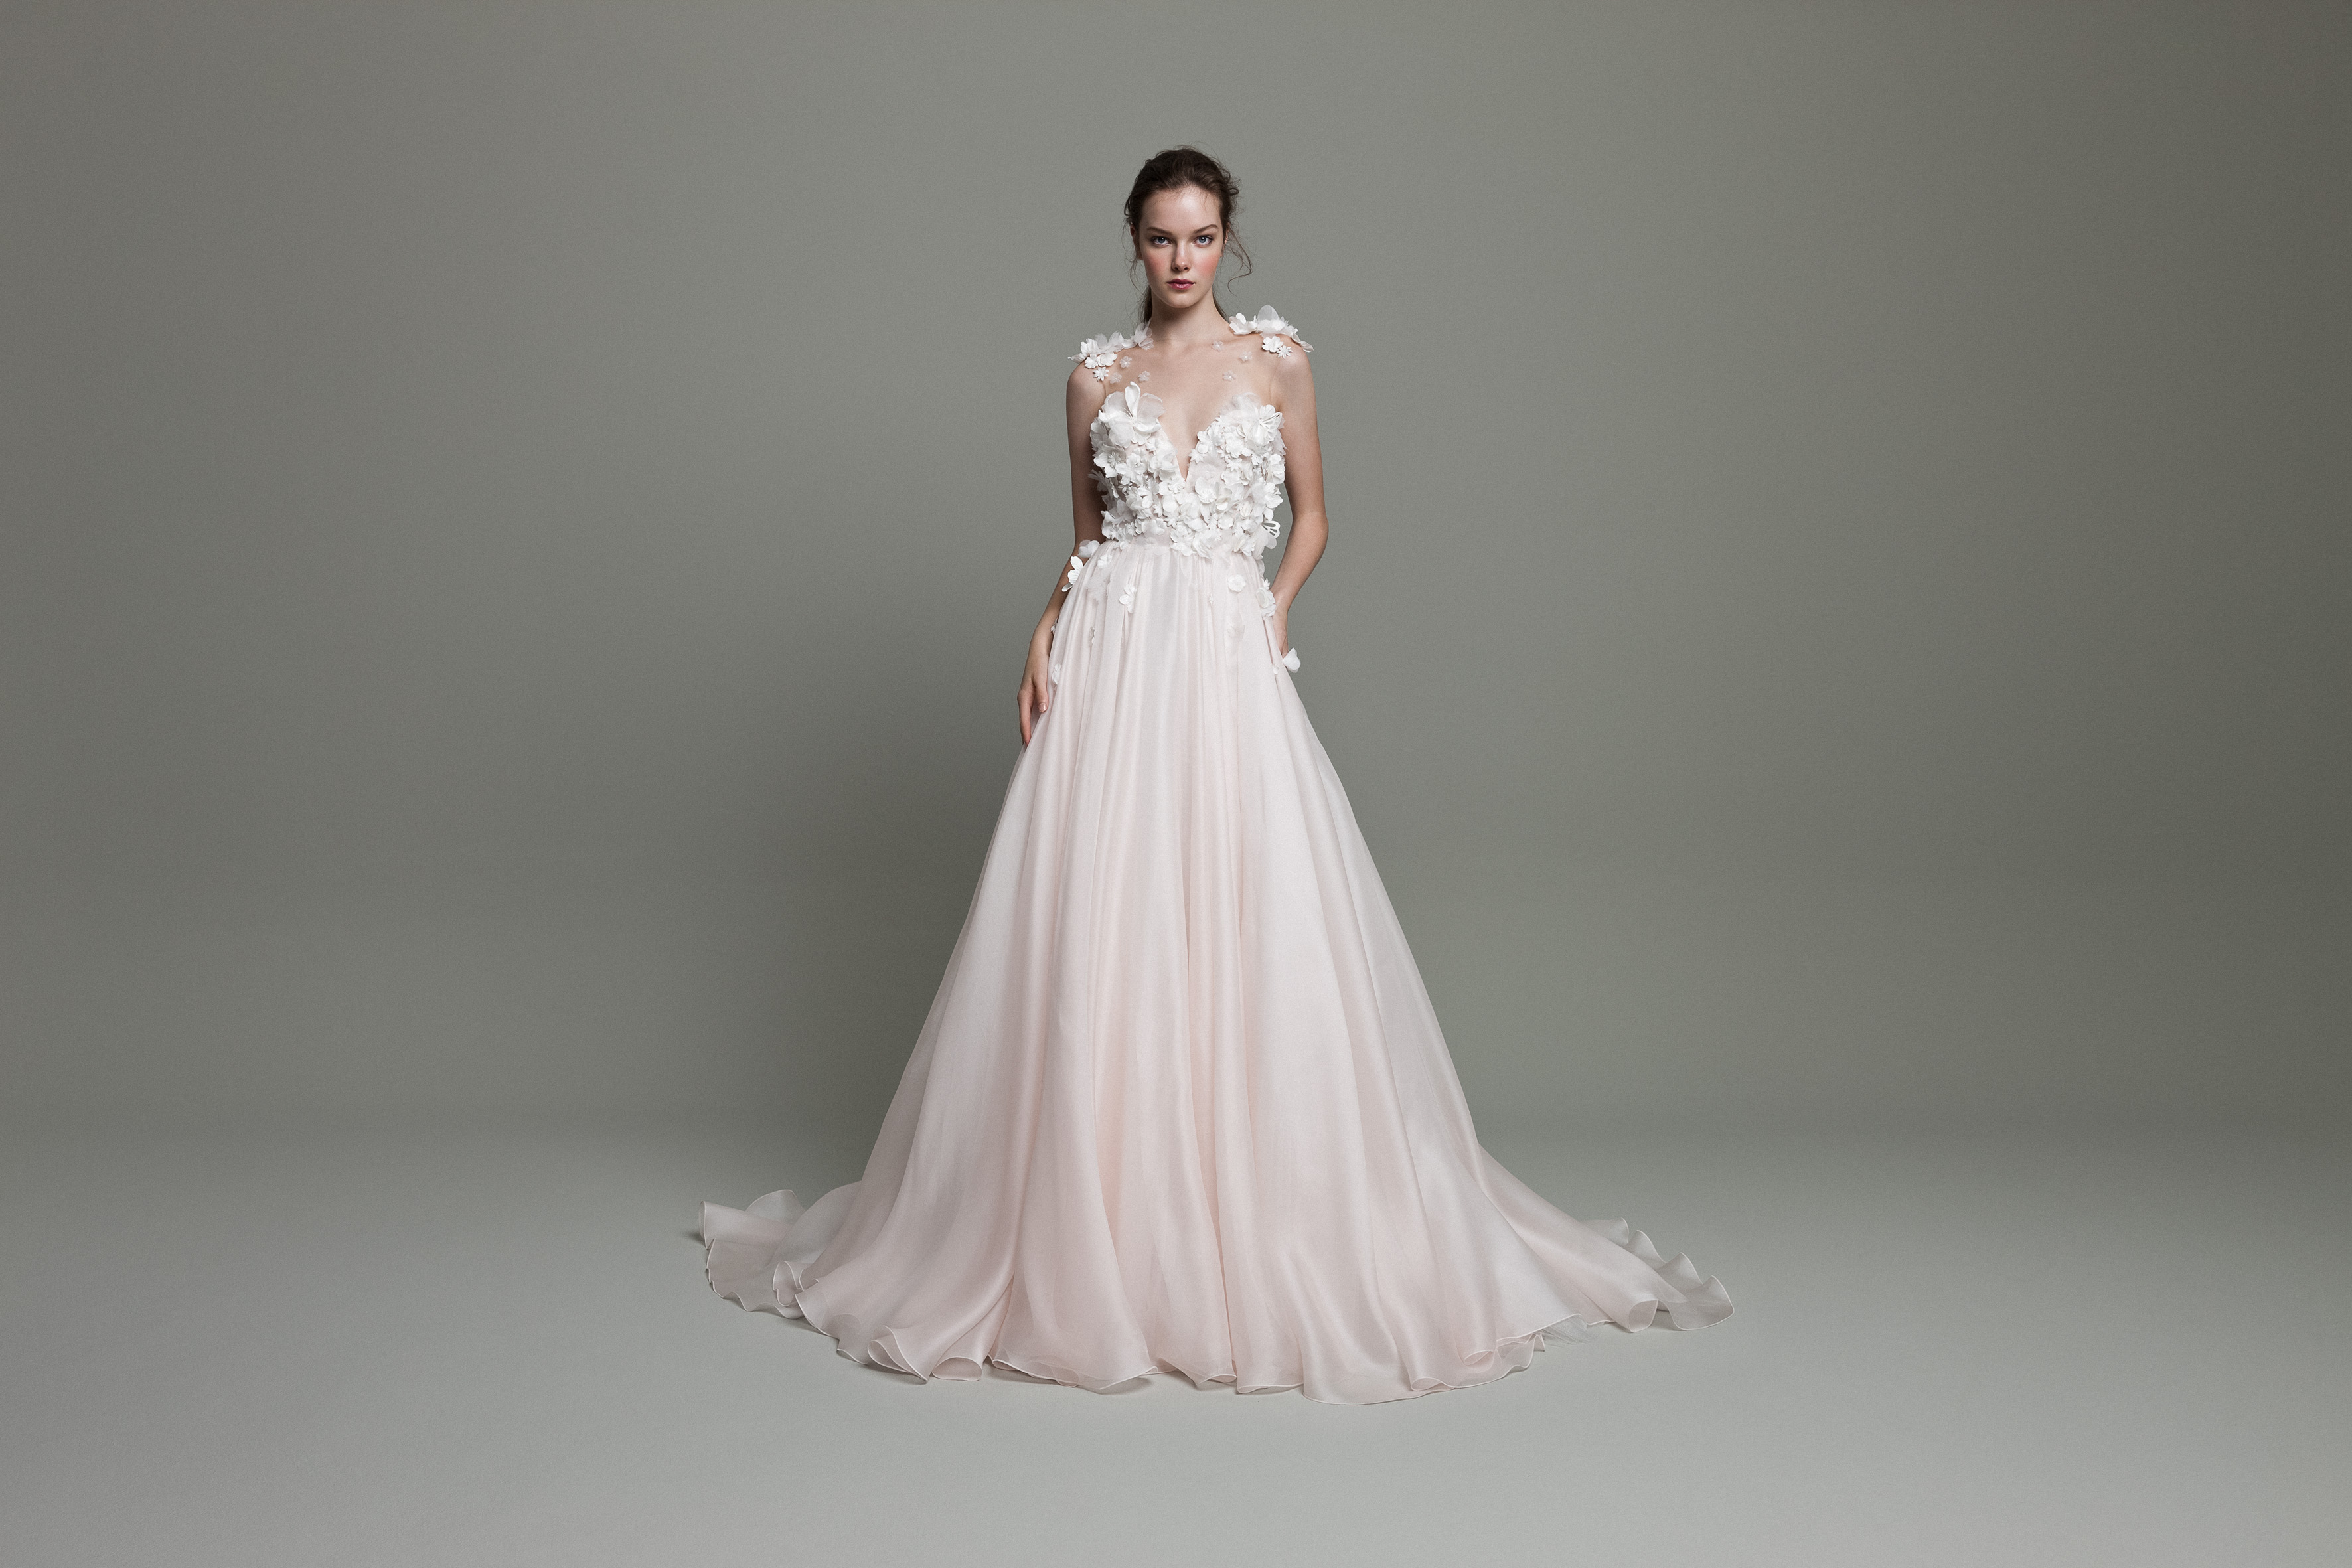 K'Mich Weddings - wedding planning - white wedding dress with tulle skirt - daalarna's designs